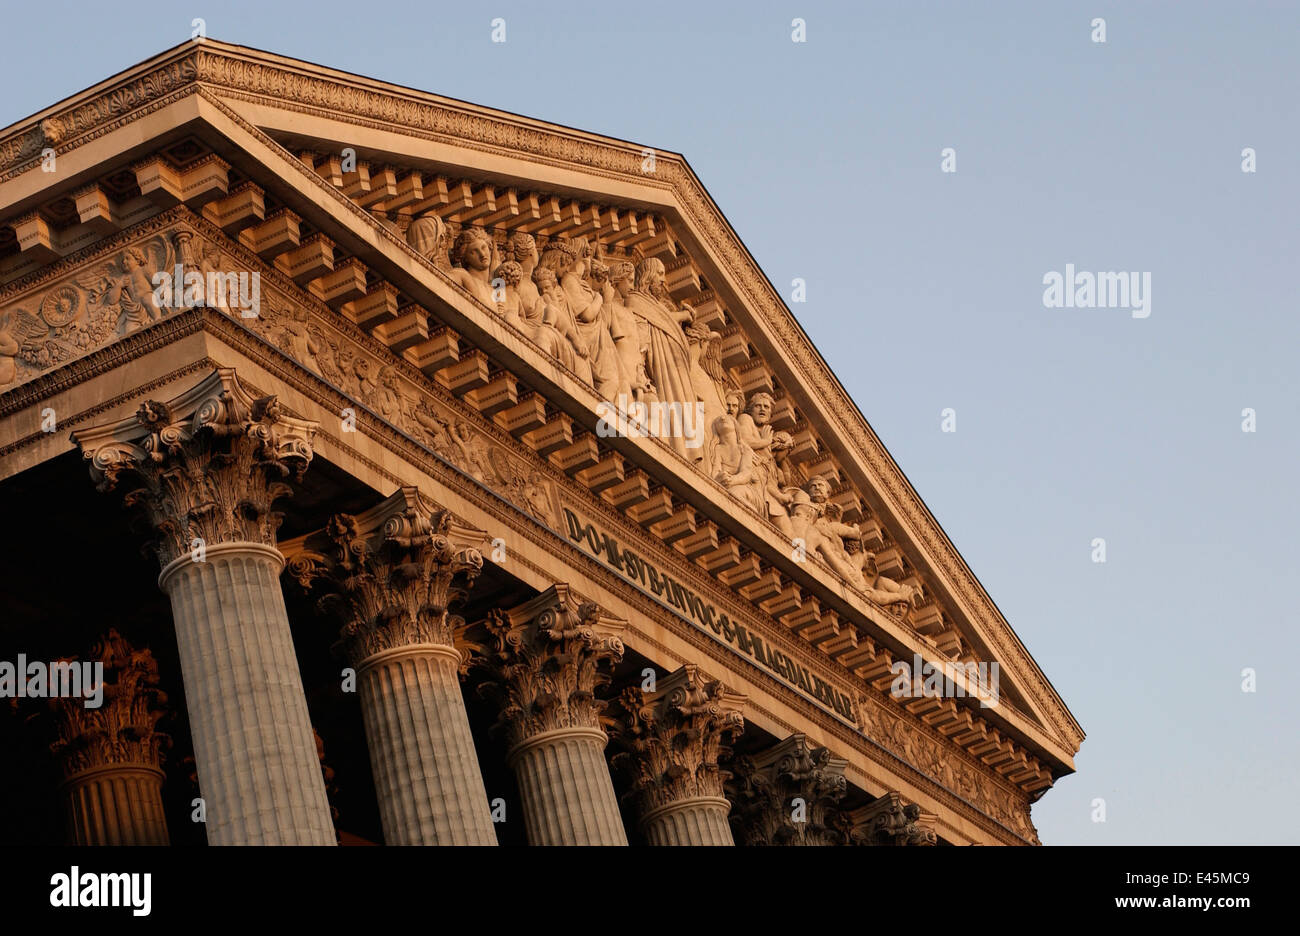 PARIS, FRANCE. - MAGDALENAE FREIZE - SCULPTURE ON THE FACADE OF THE CHURCH OF LA MADALEINE. PHOTO:JONATHAN EASTLAND/AJAX Stock Photo